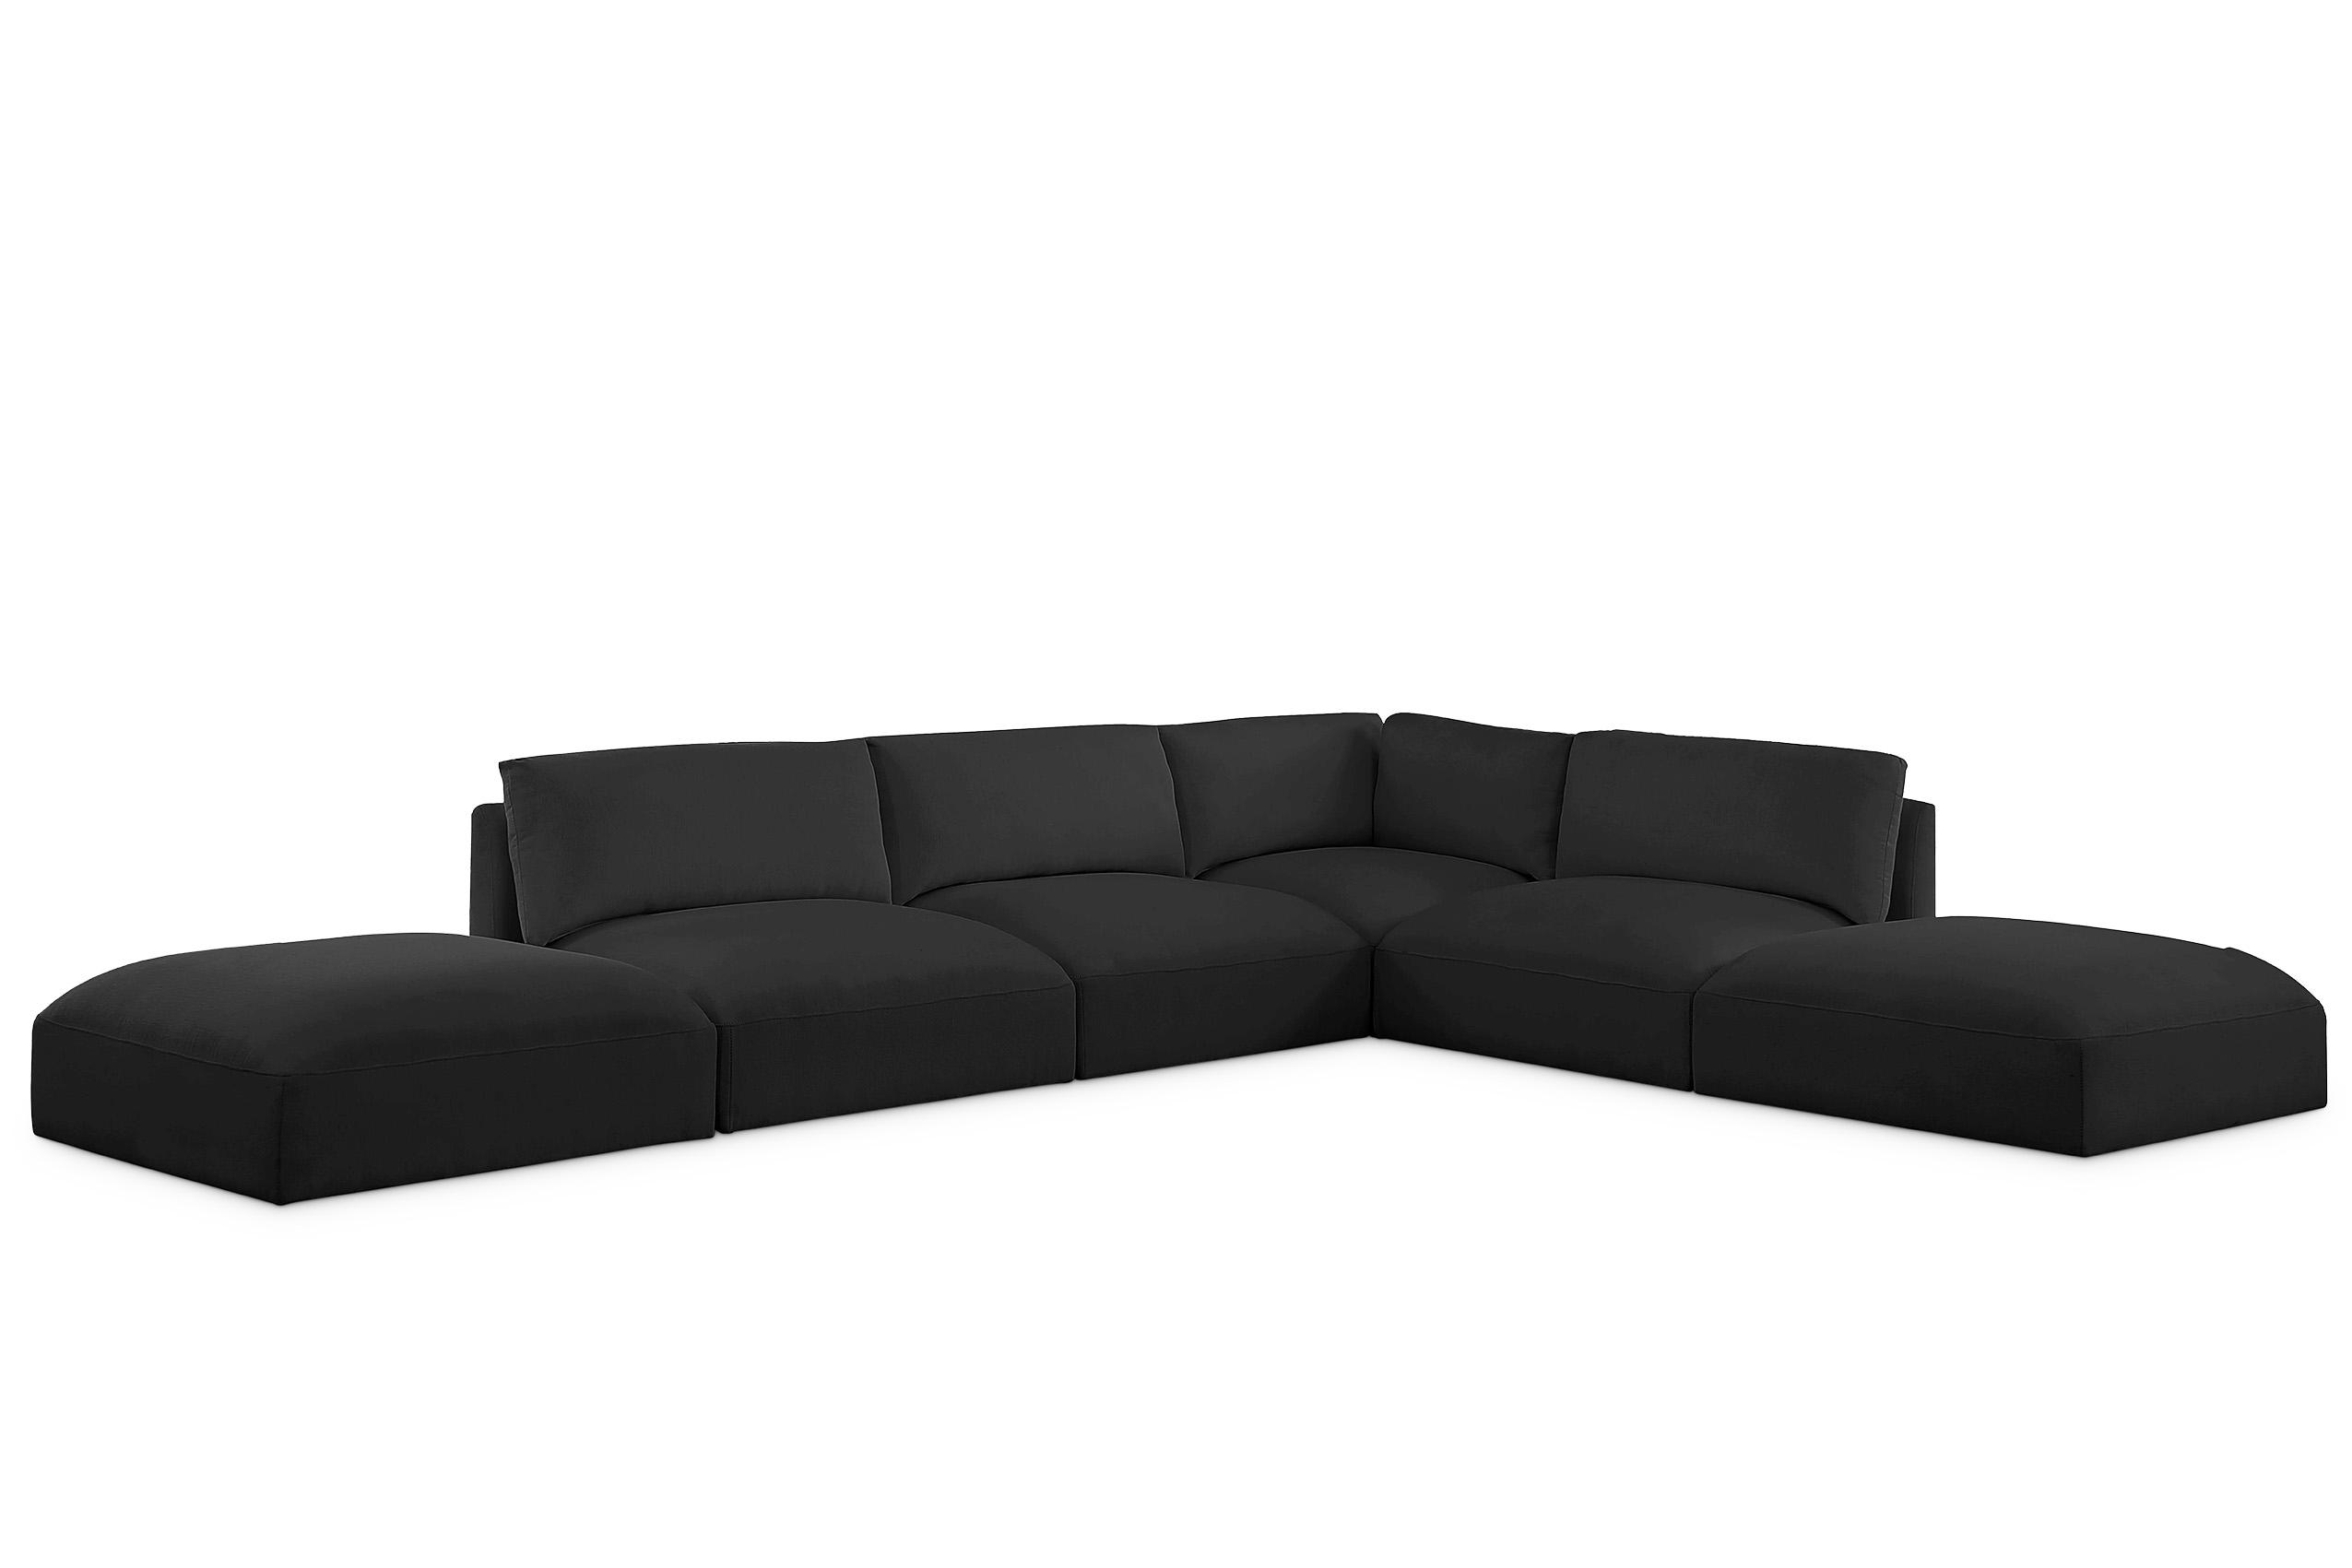 Contemporary, Modern Modular Sectional Sofa EASE 696Black-Sec6E 696Black-Sec6E in Black Fabric